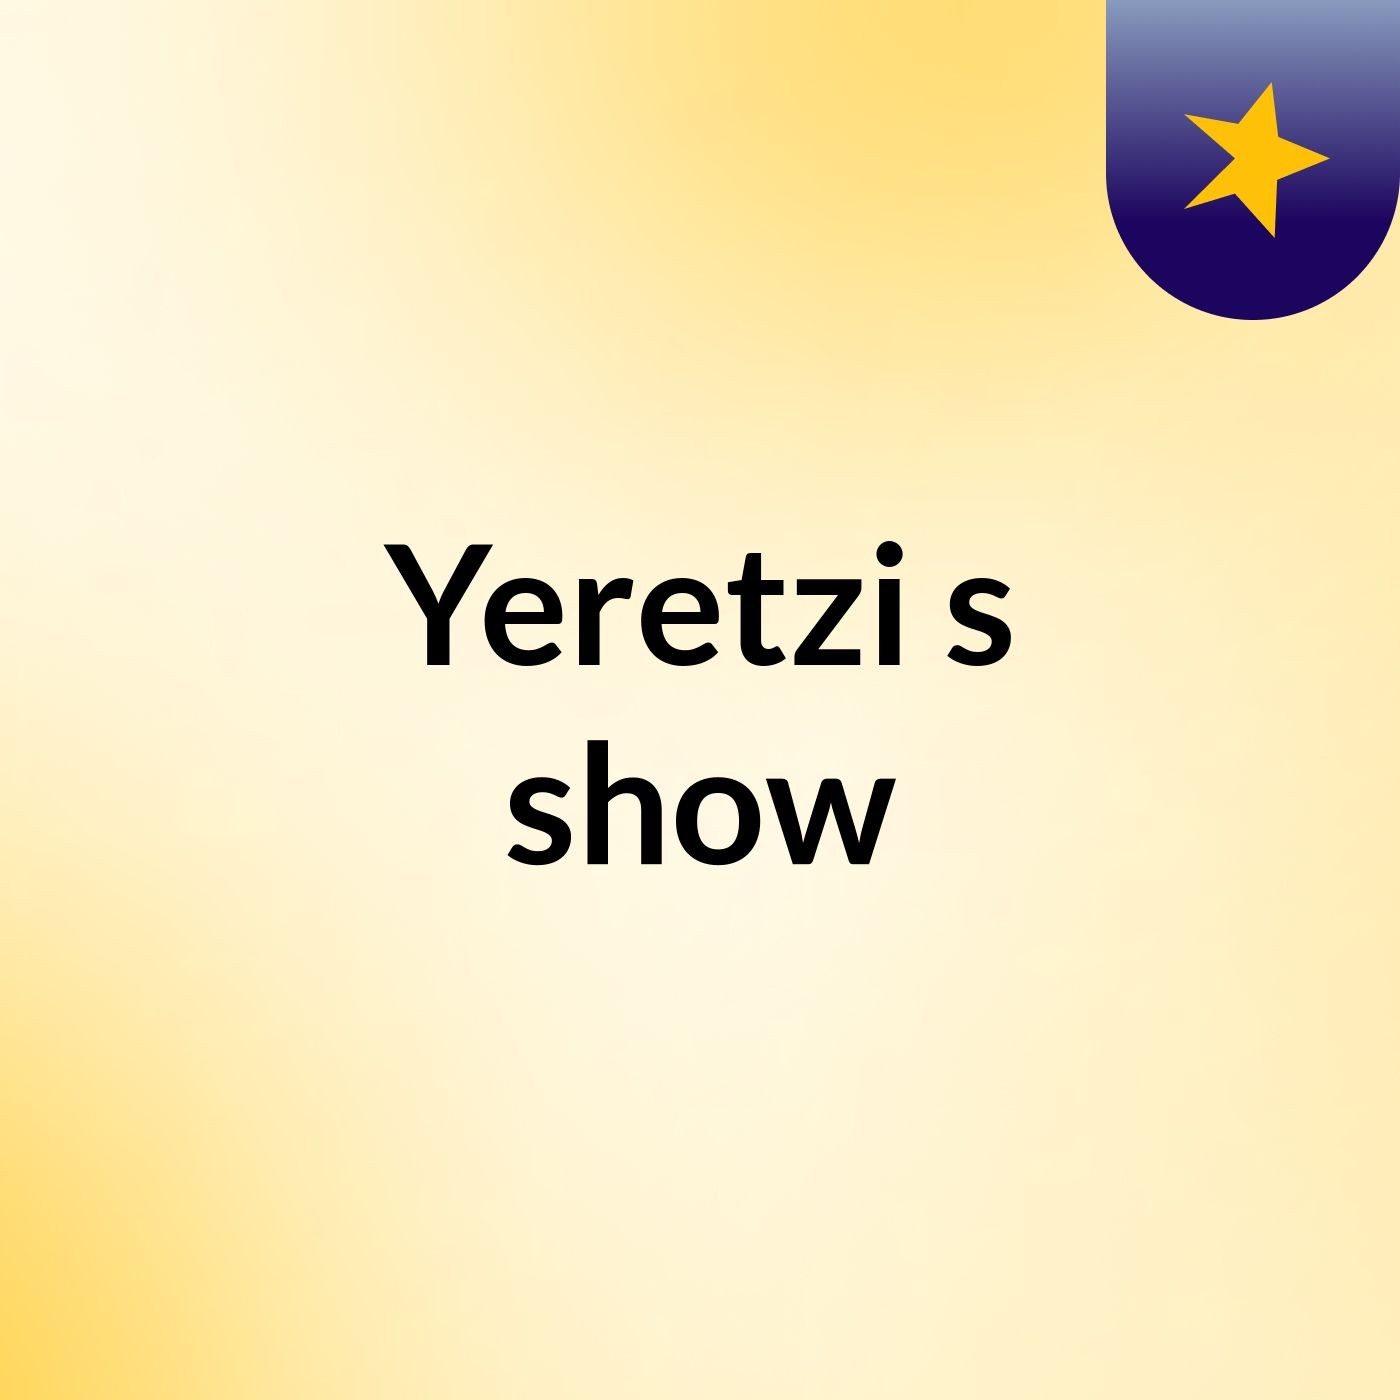 Yeretzi's show